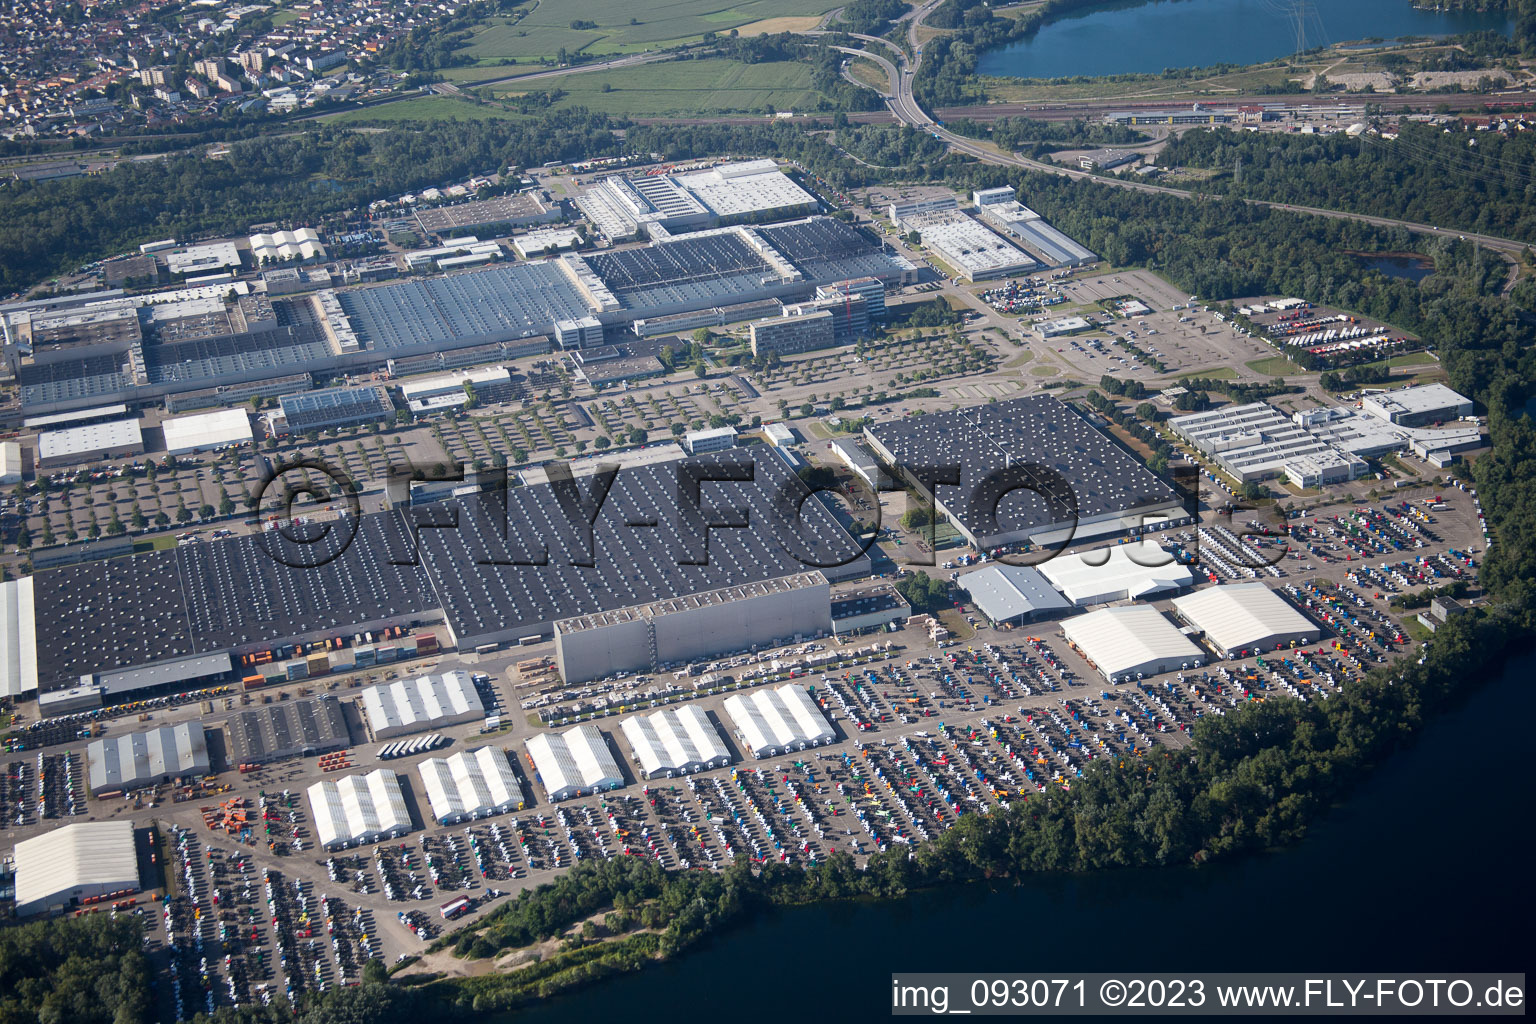 Daimler truck factory in Wörth am Rhein in the state Rhineland-Palatinate, Germany